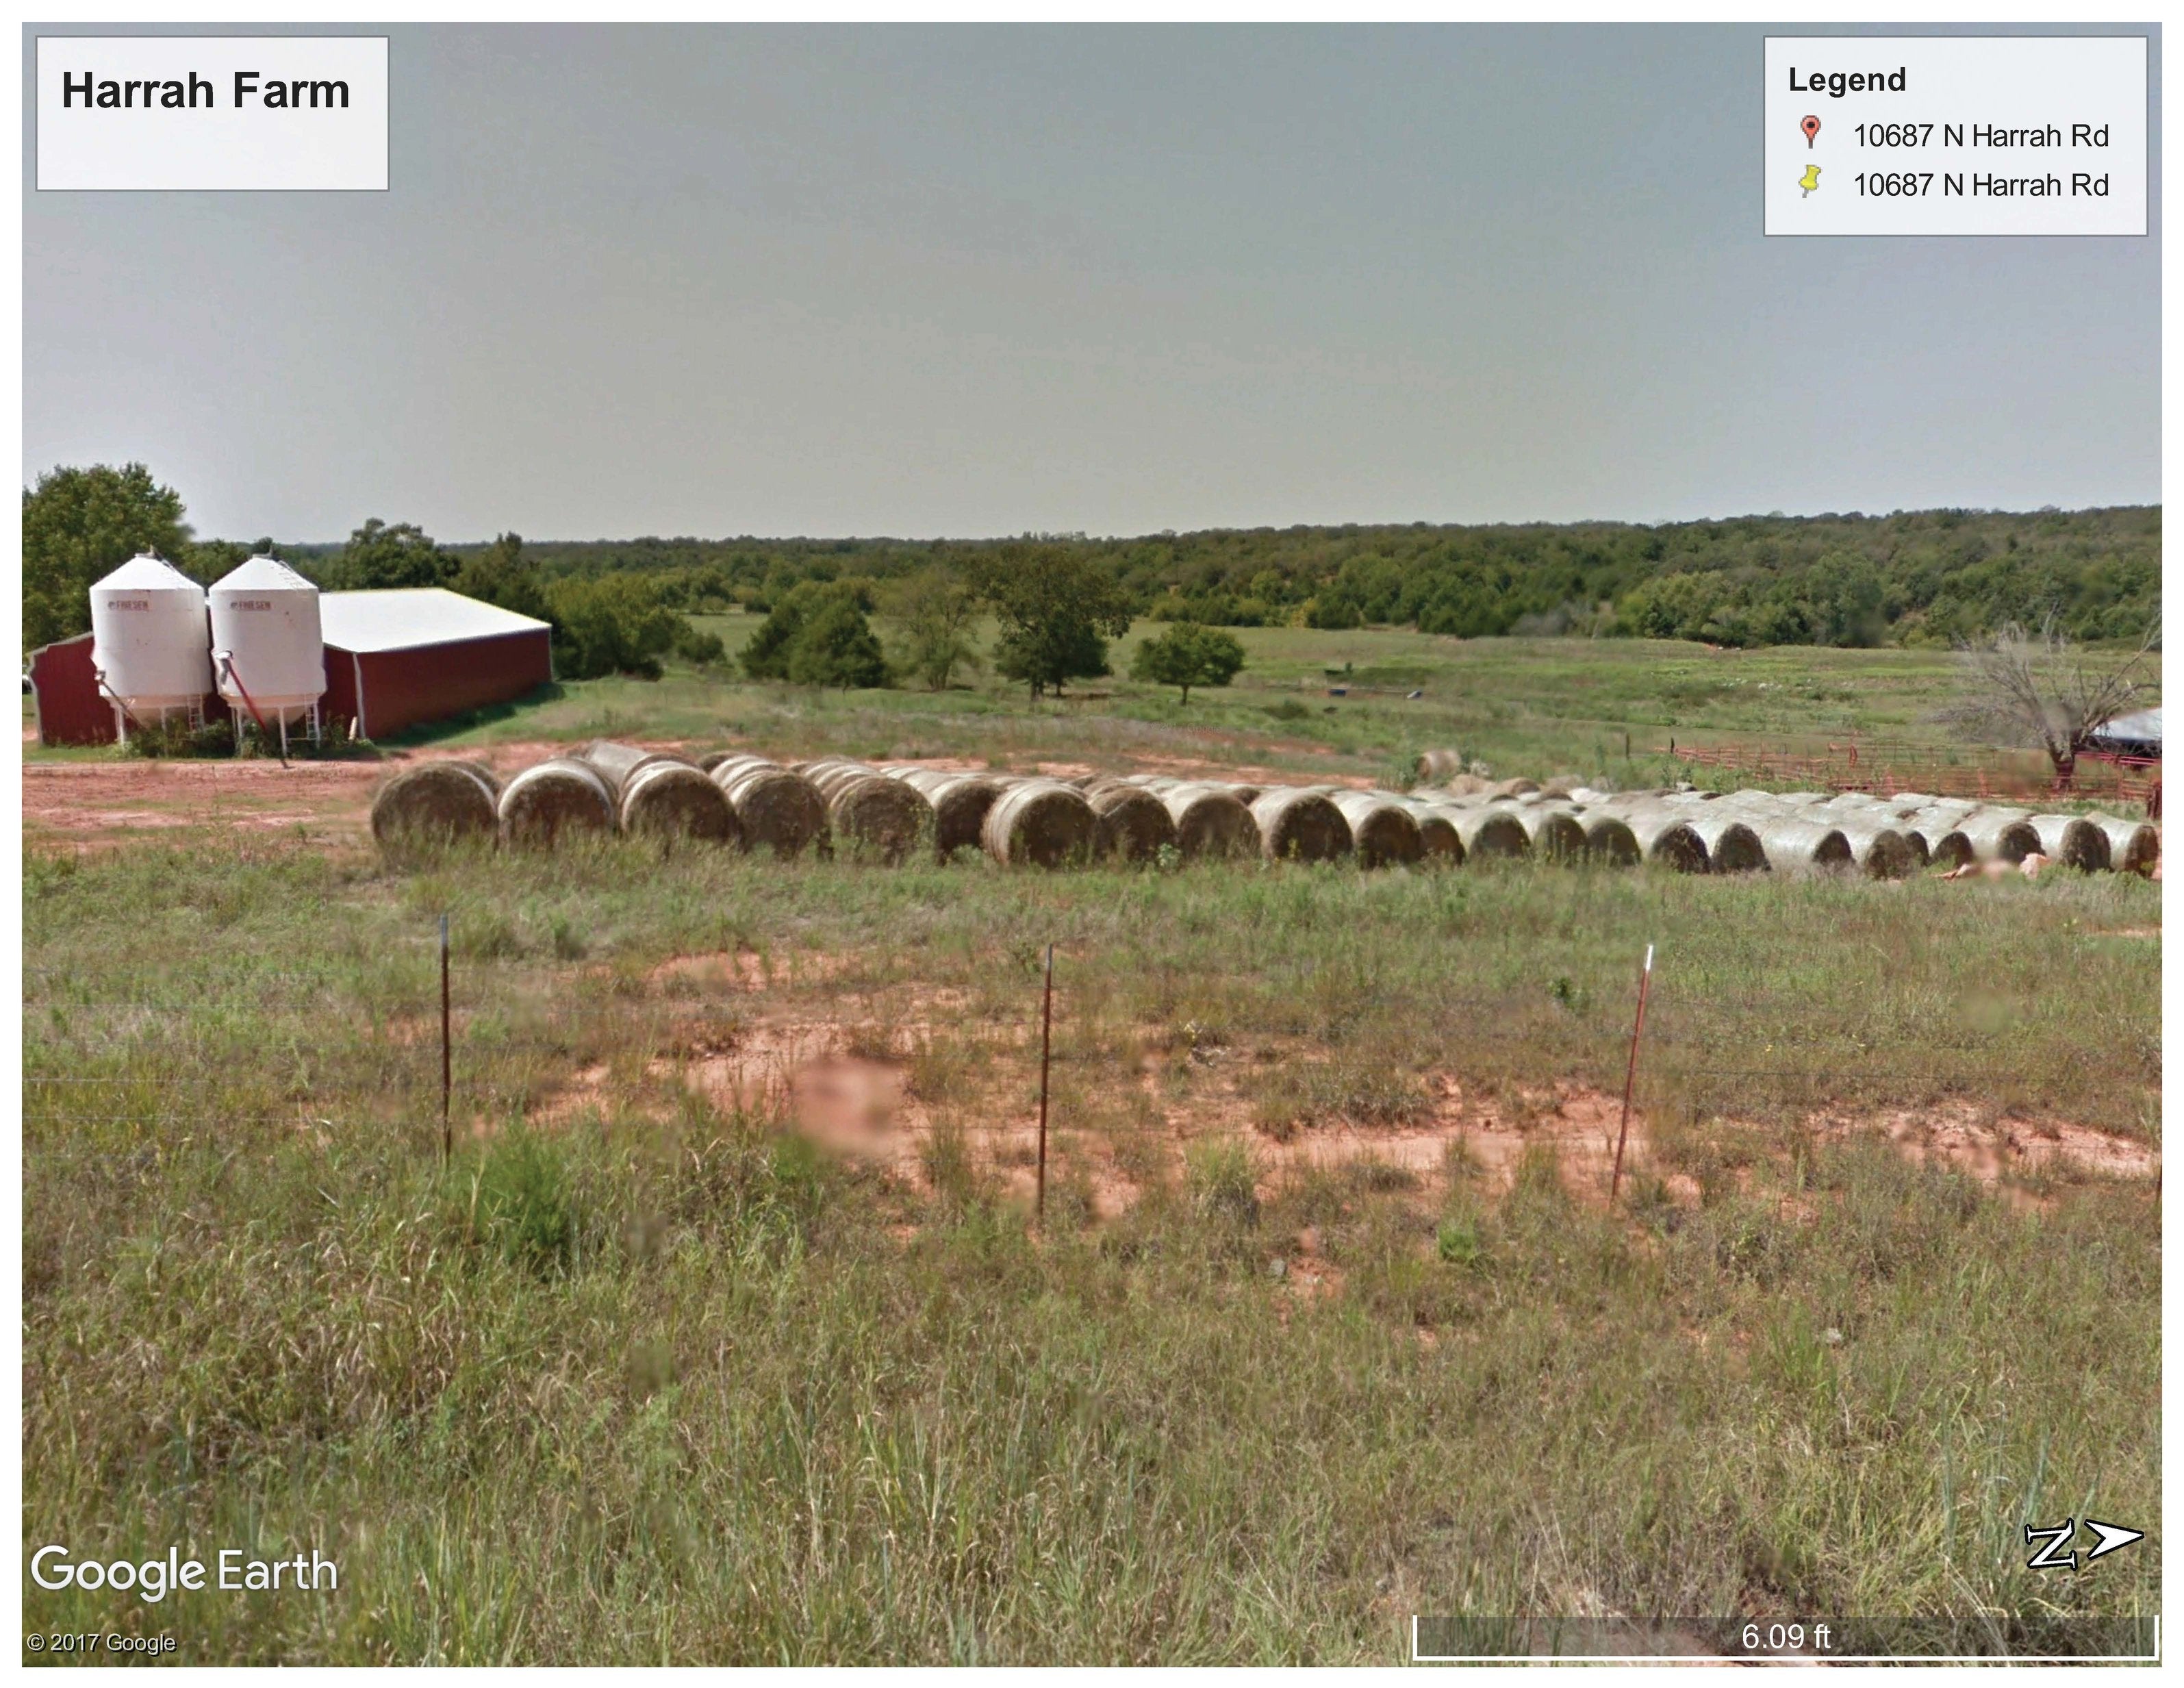 Oklahoma Farm Internship or Job